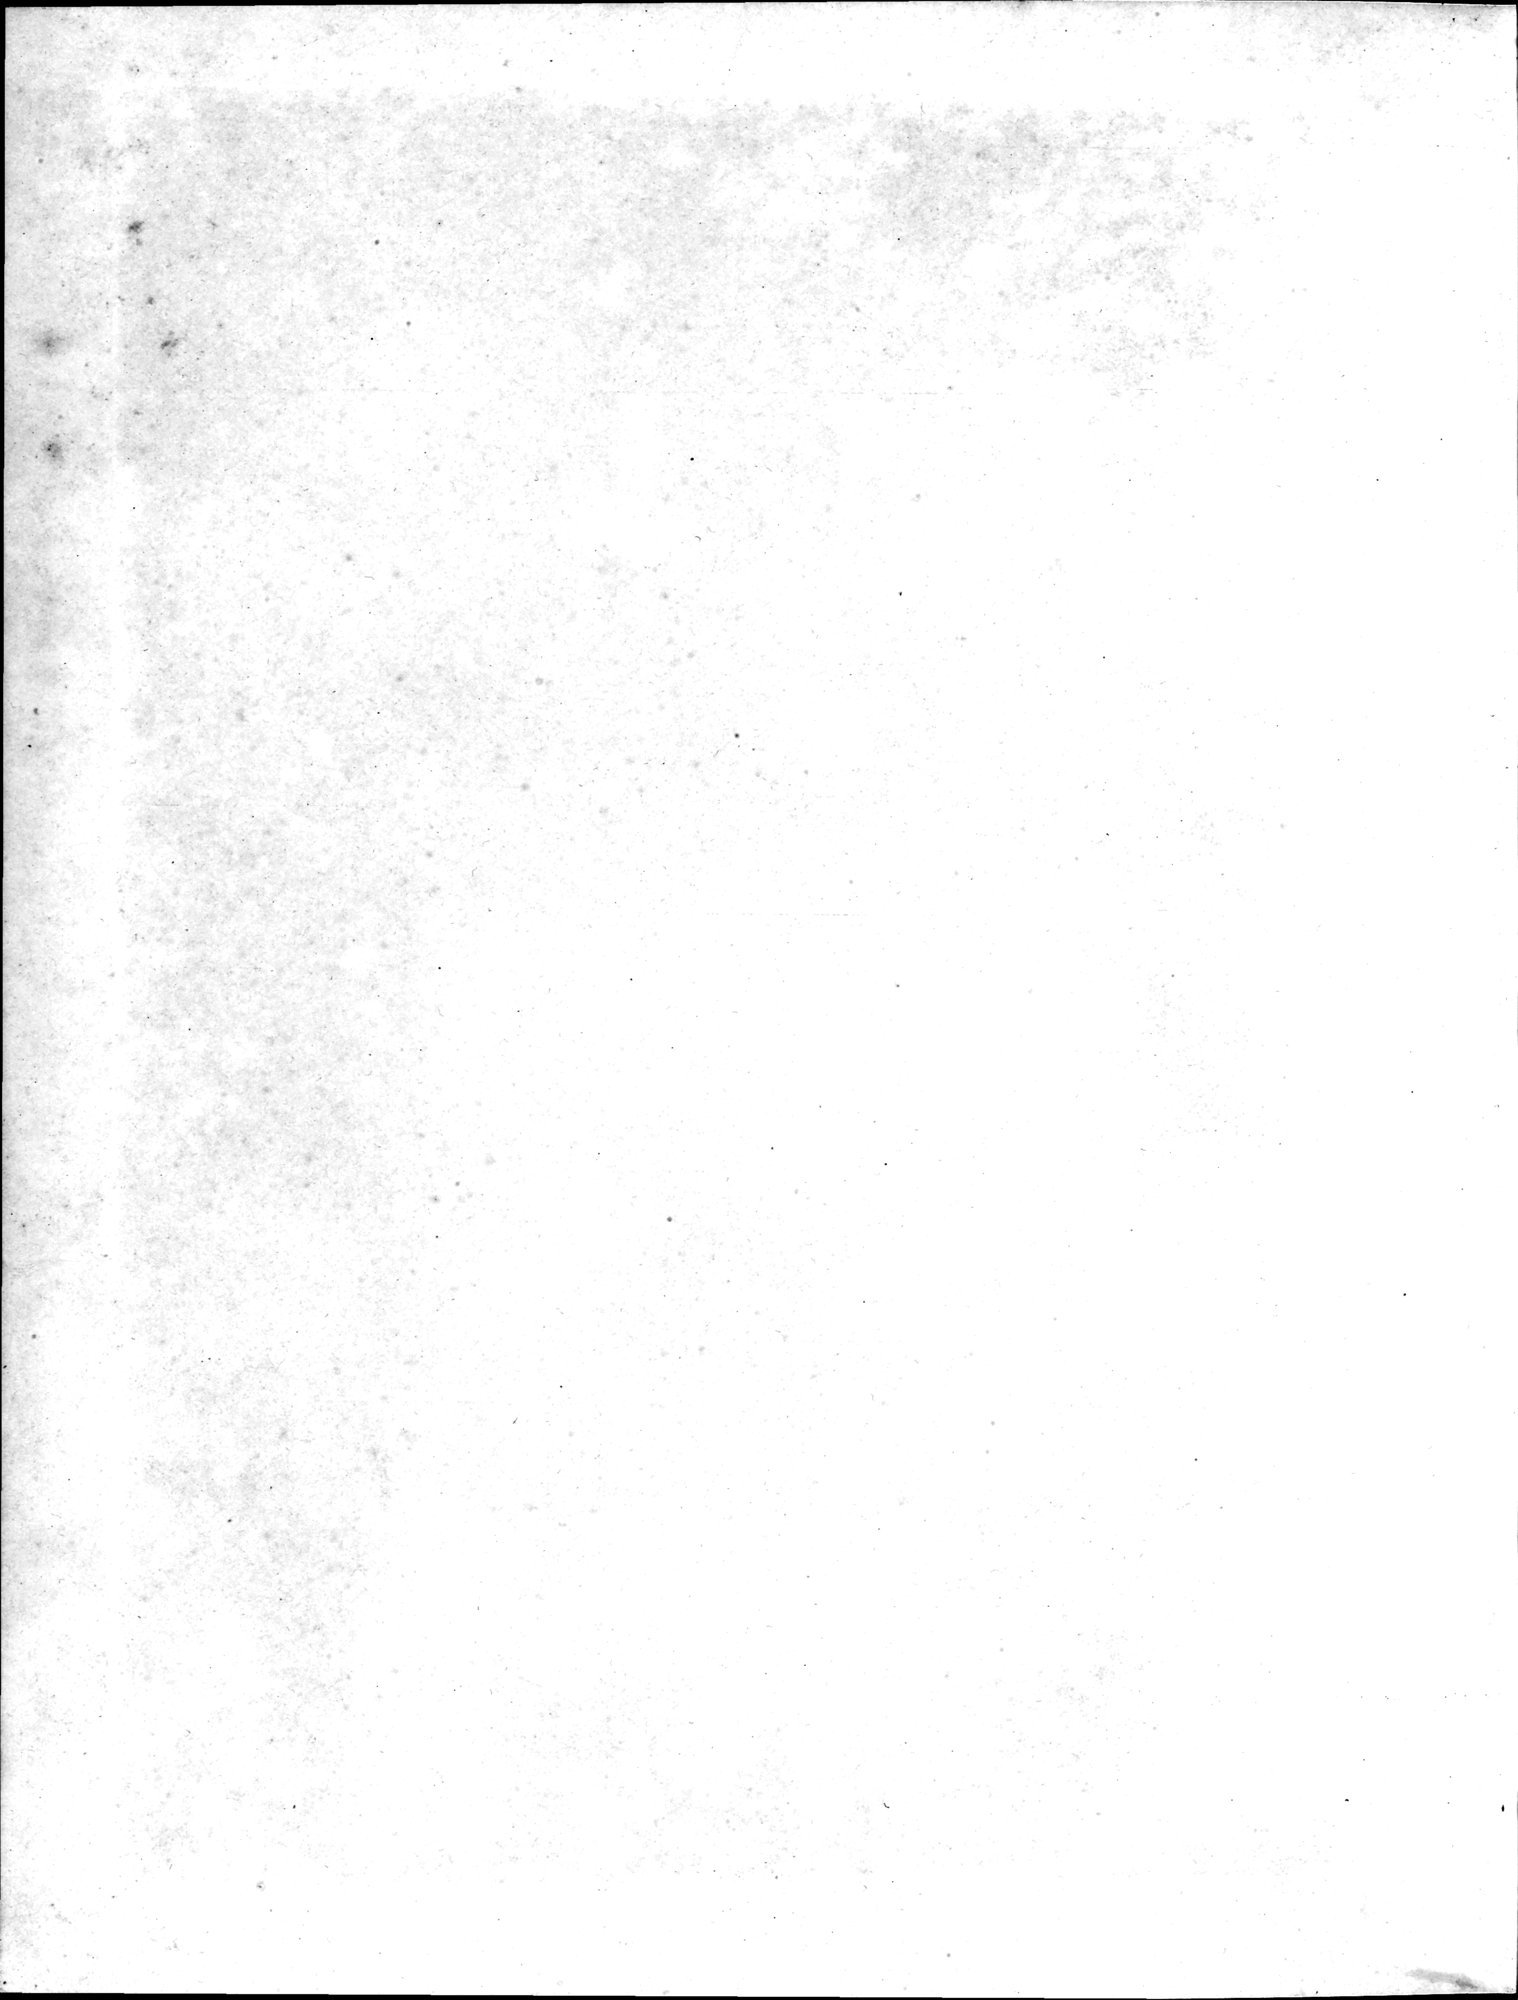 Mongoliia i Kam : vol.4 / Page 68 (Grayscale High Resolution Image)